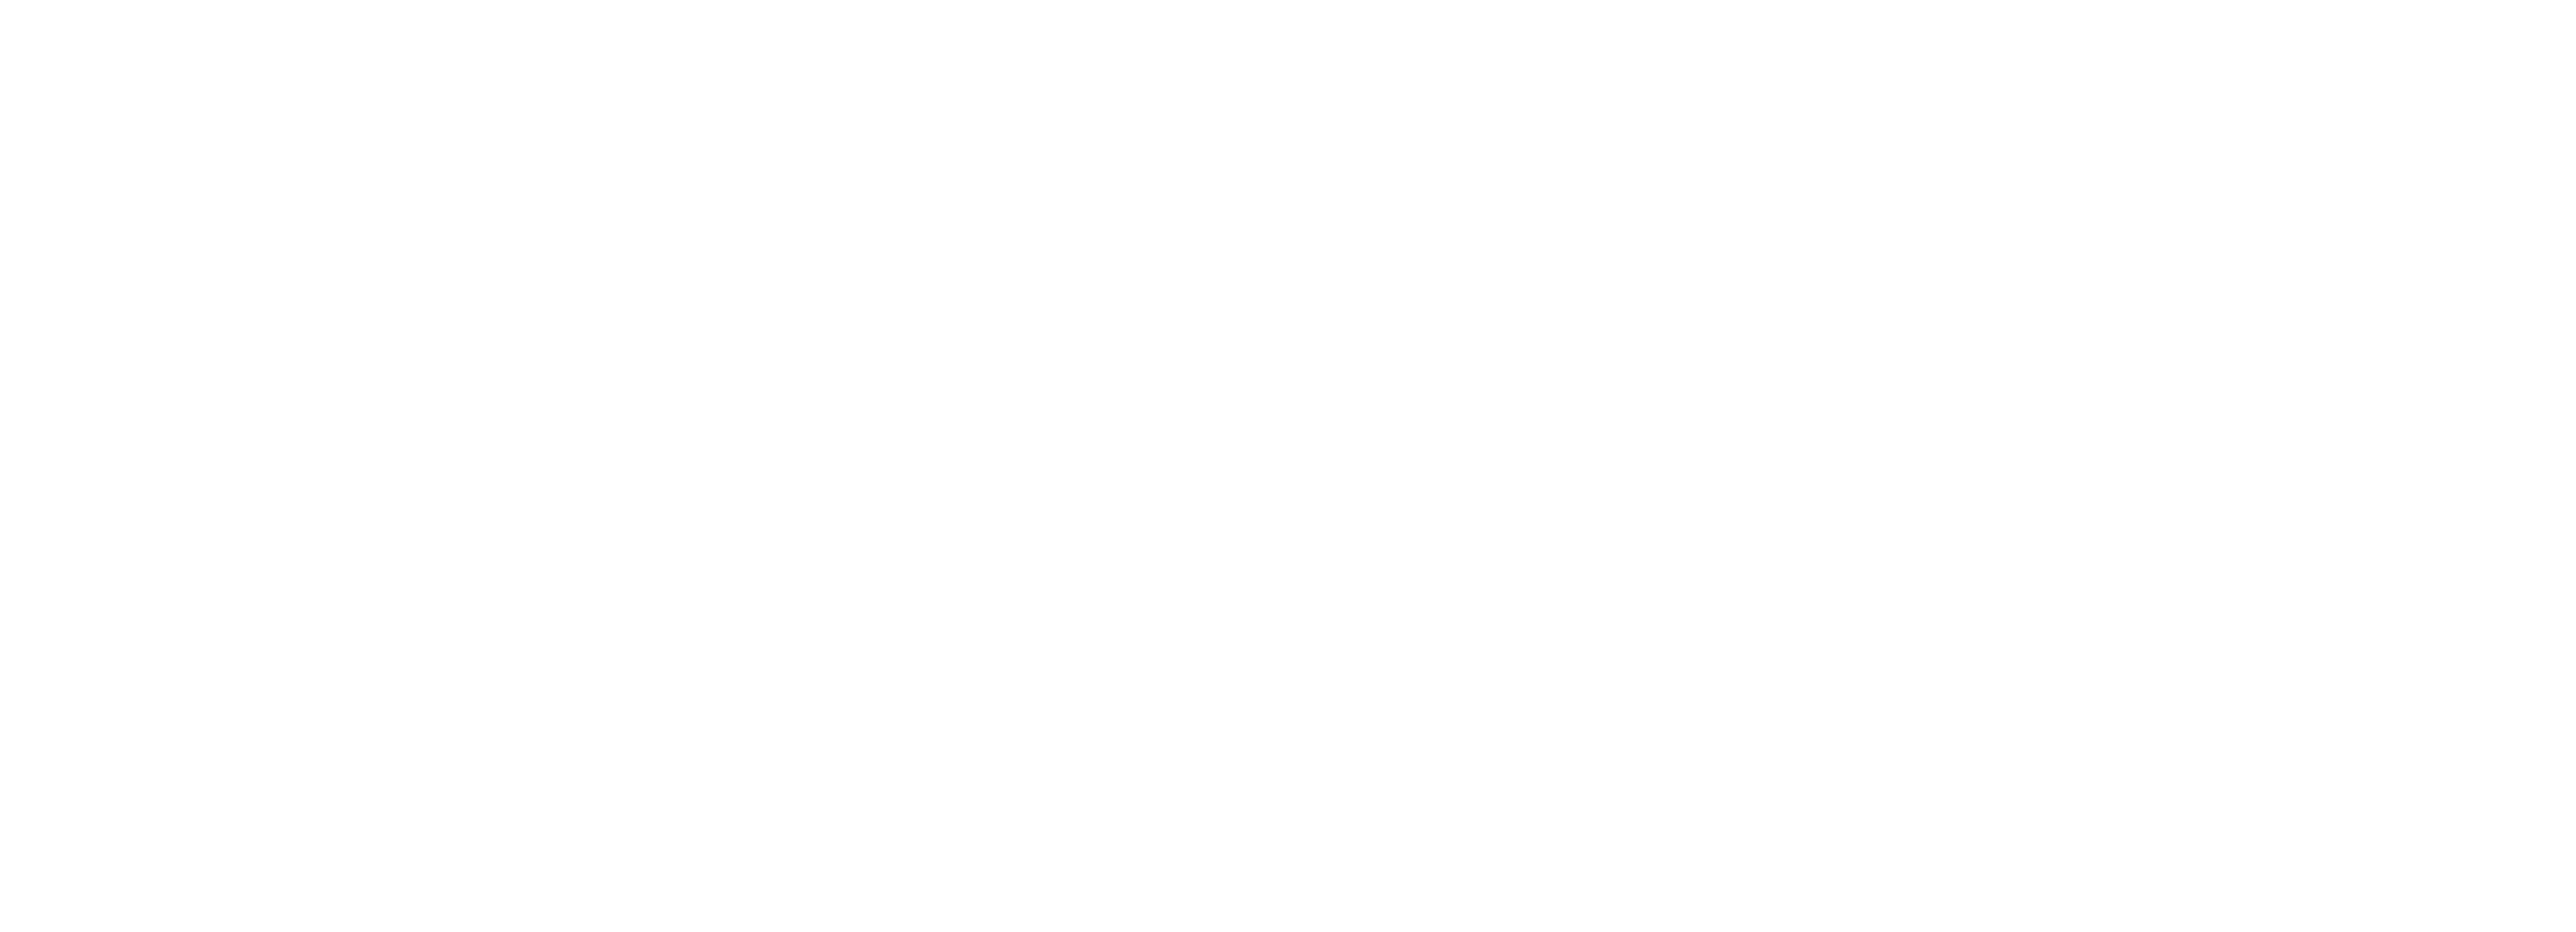 MagiCats! in: Death Trip